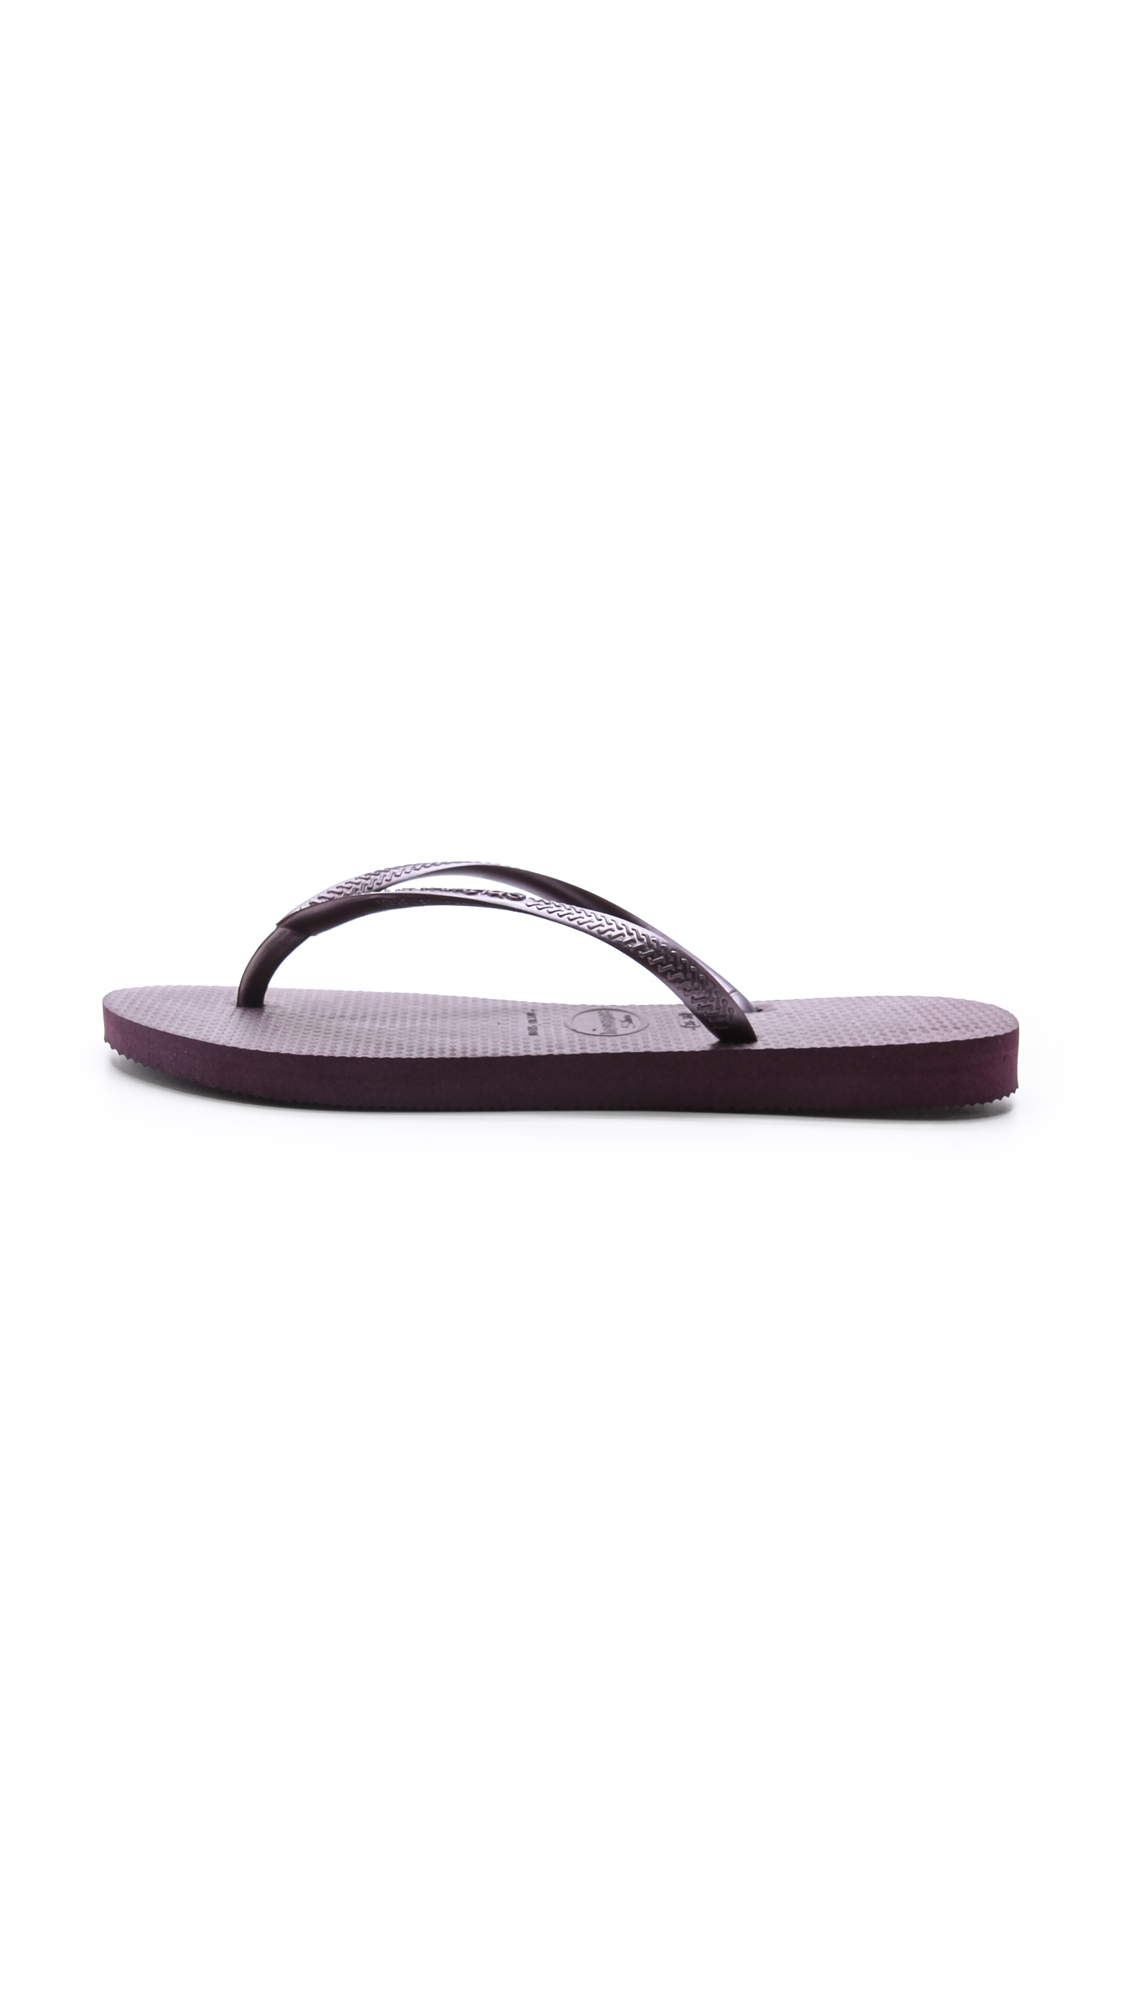 Havaianas Slim Flip Flops in Purple - Lyst